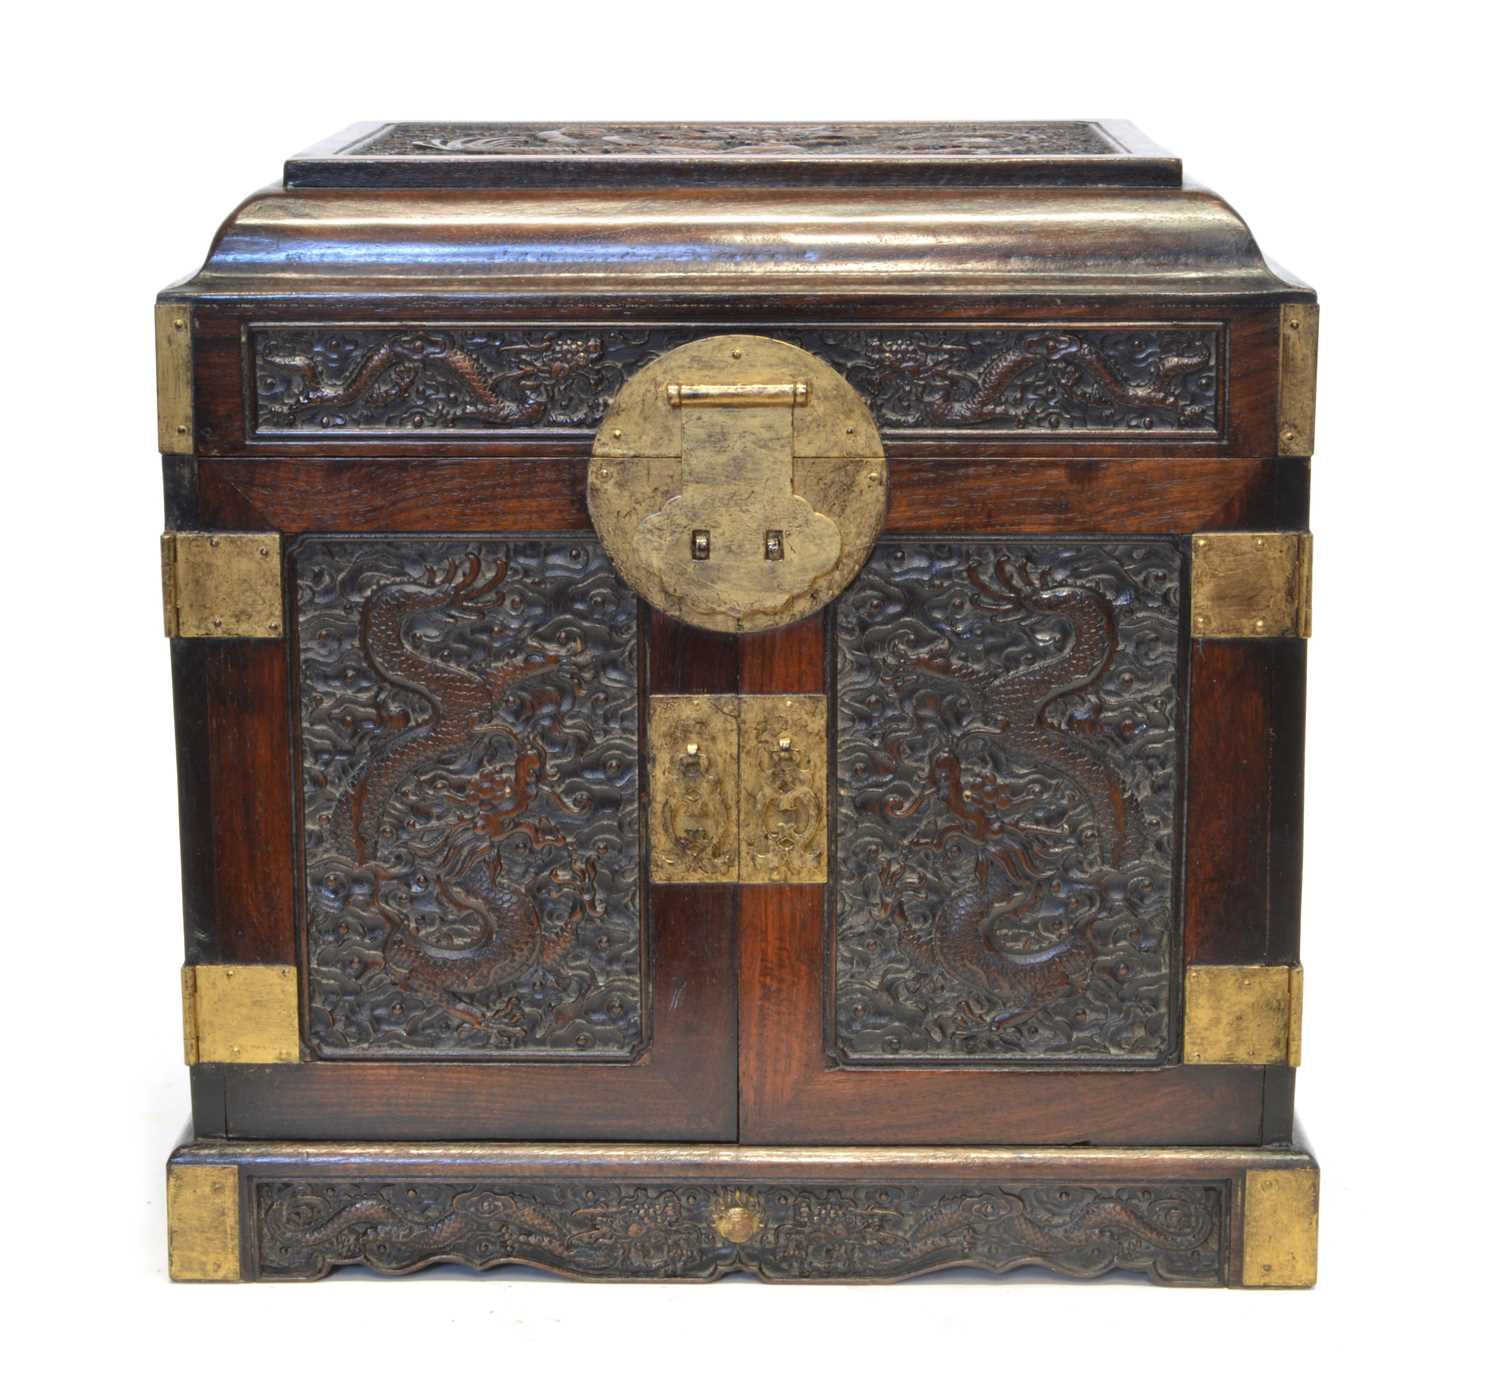 224 - Chinese brass bound jewellery travel chest